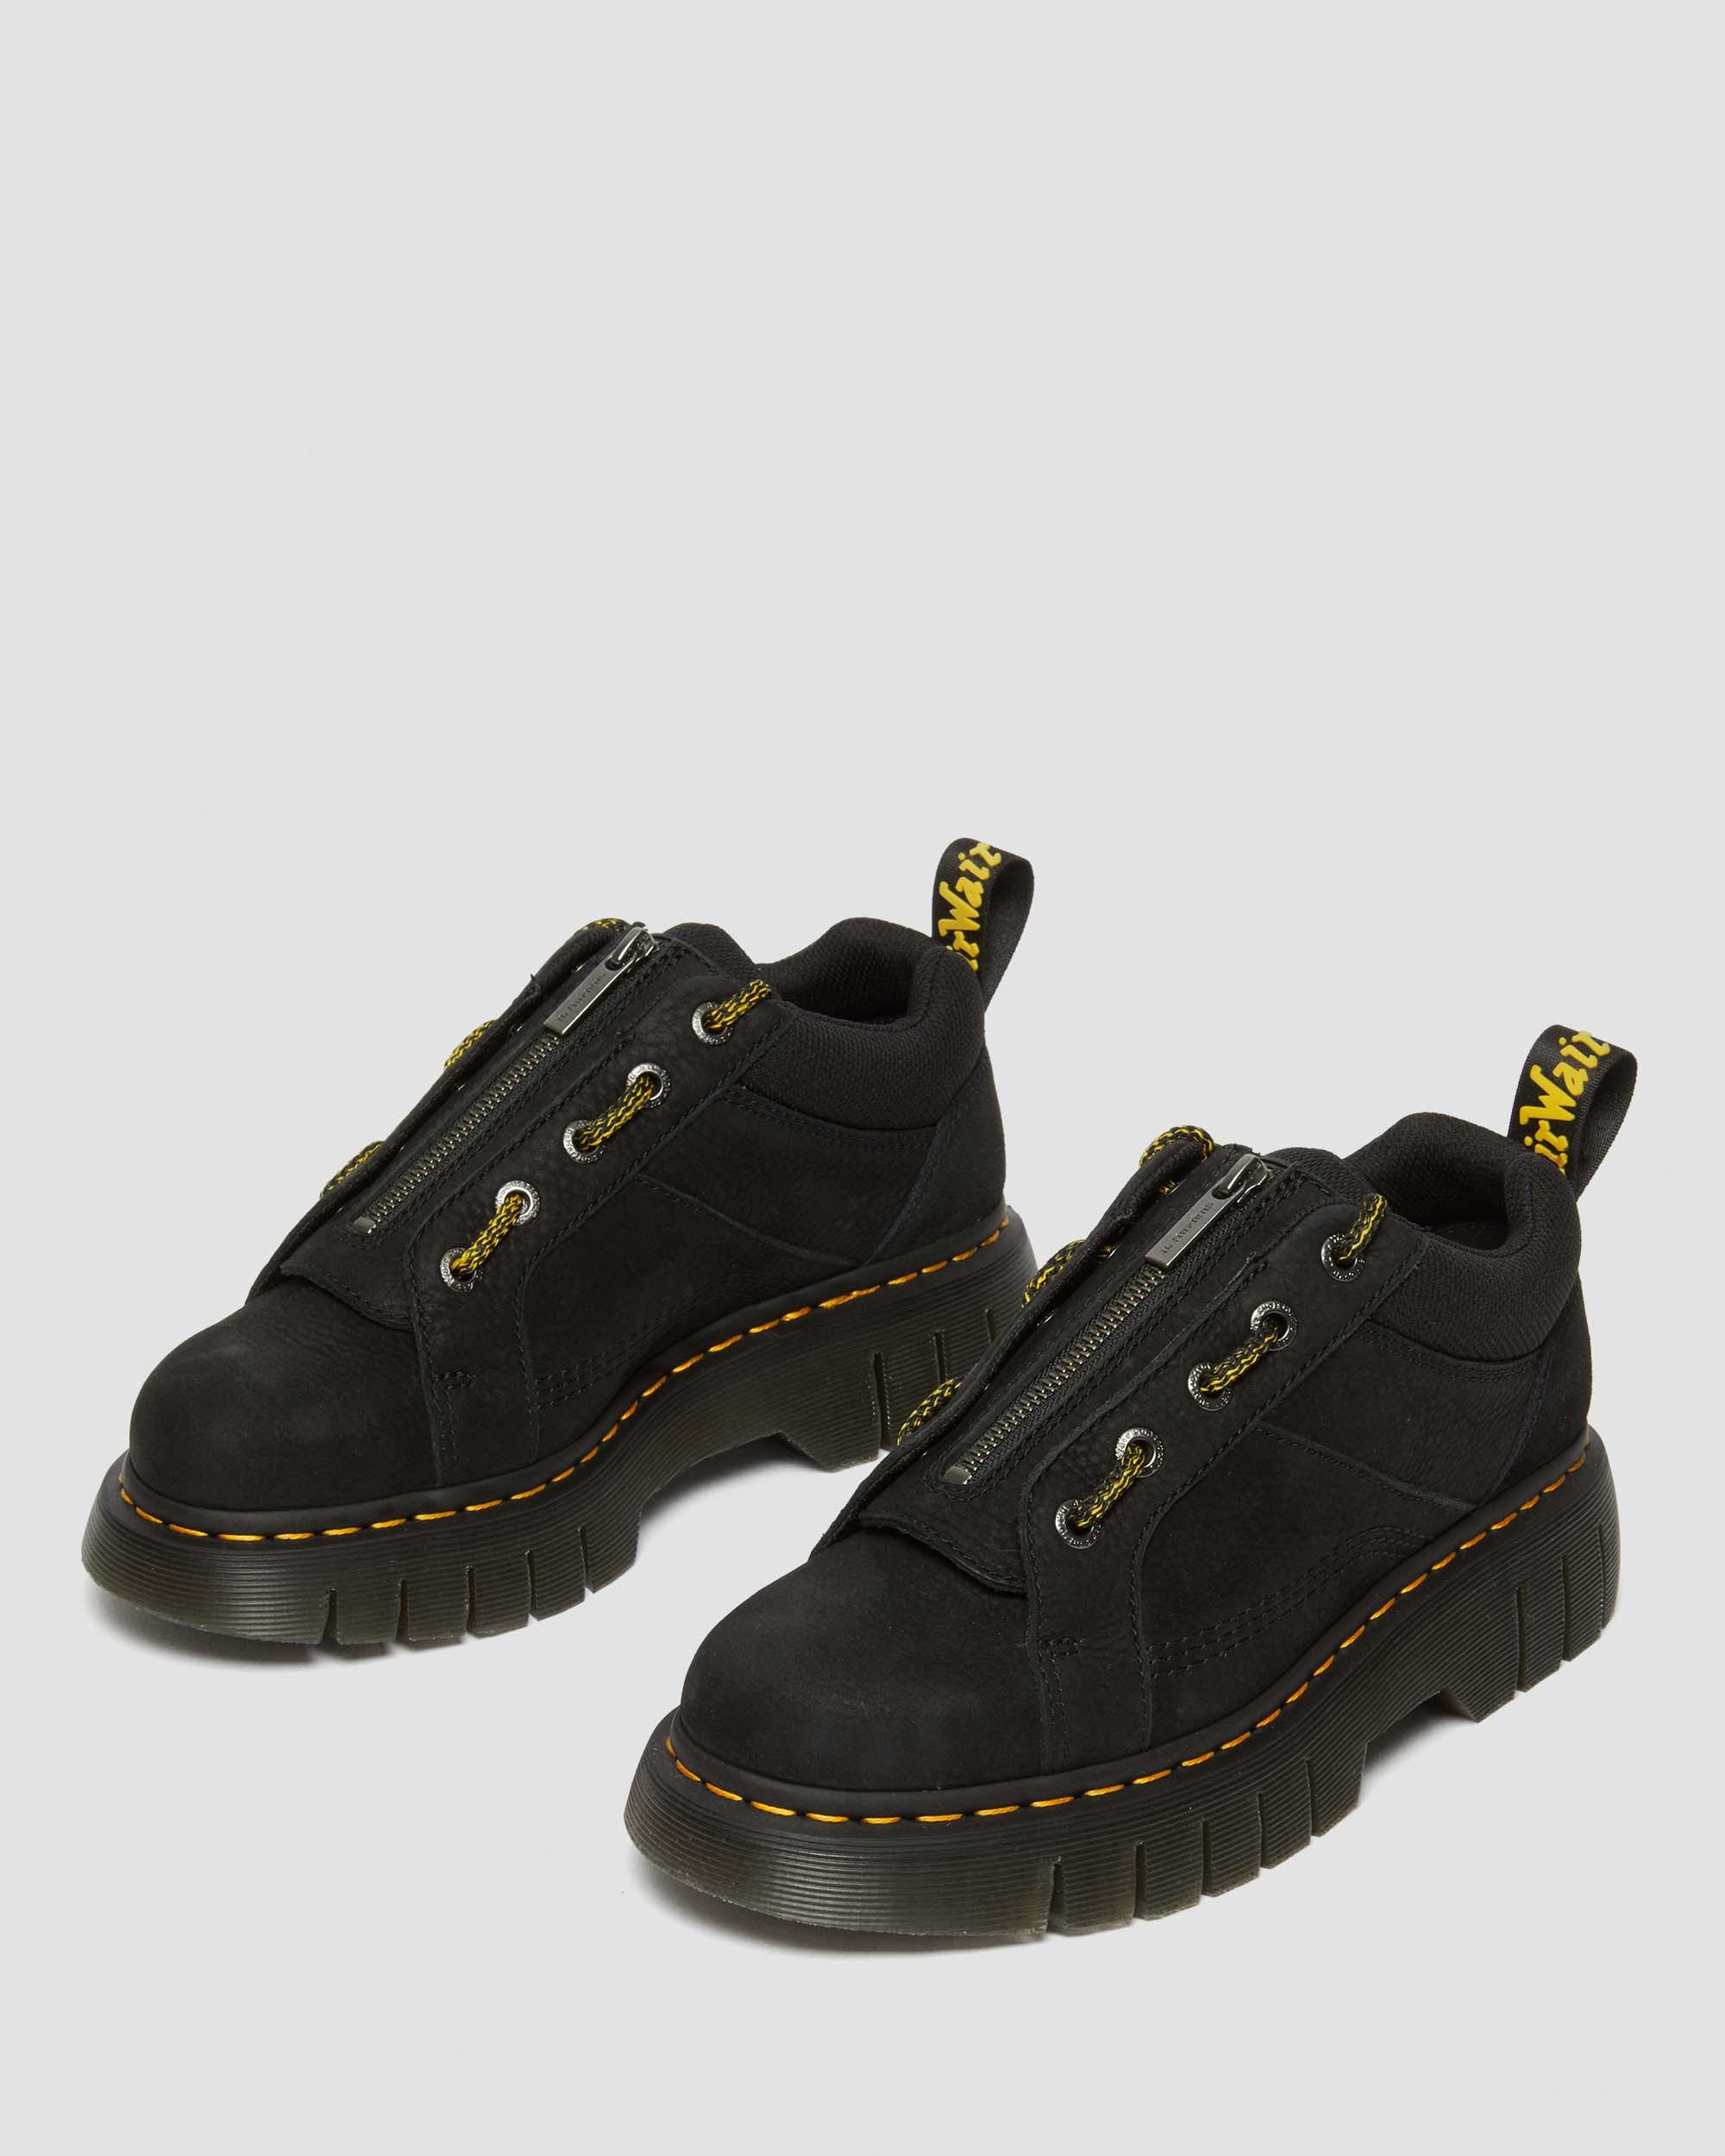 Woodard Tumbled Nubuck Leather Zip Shoes in Black